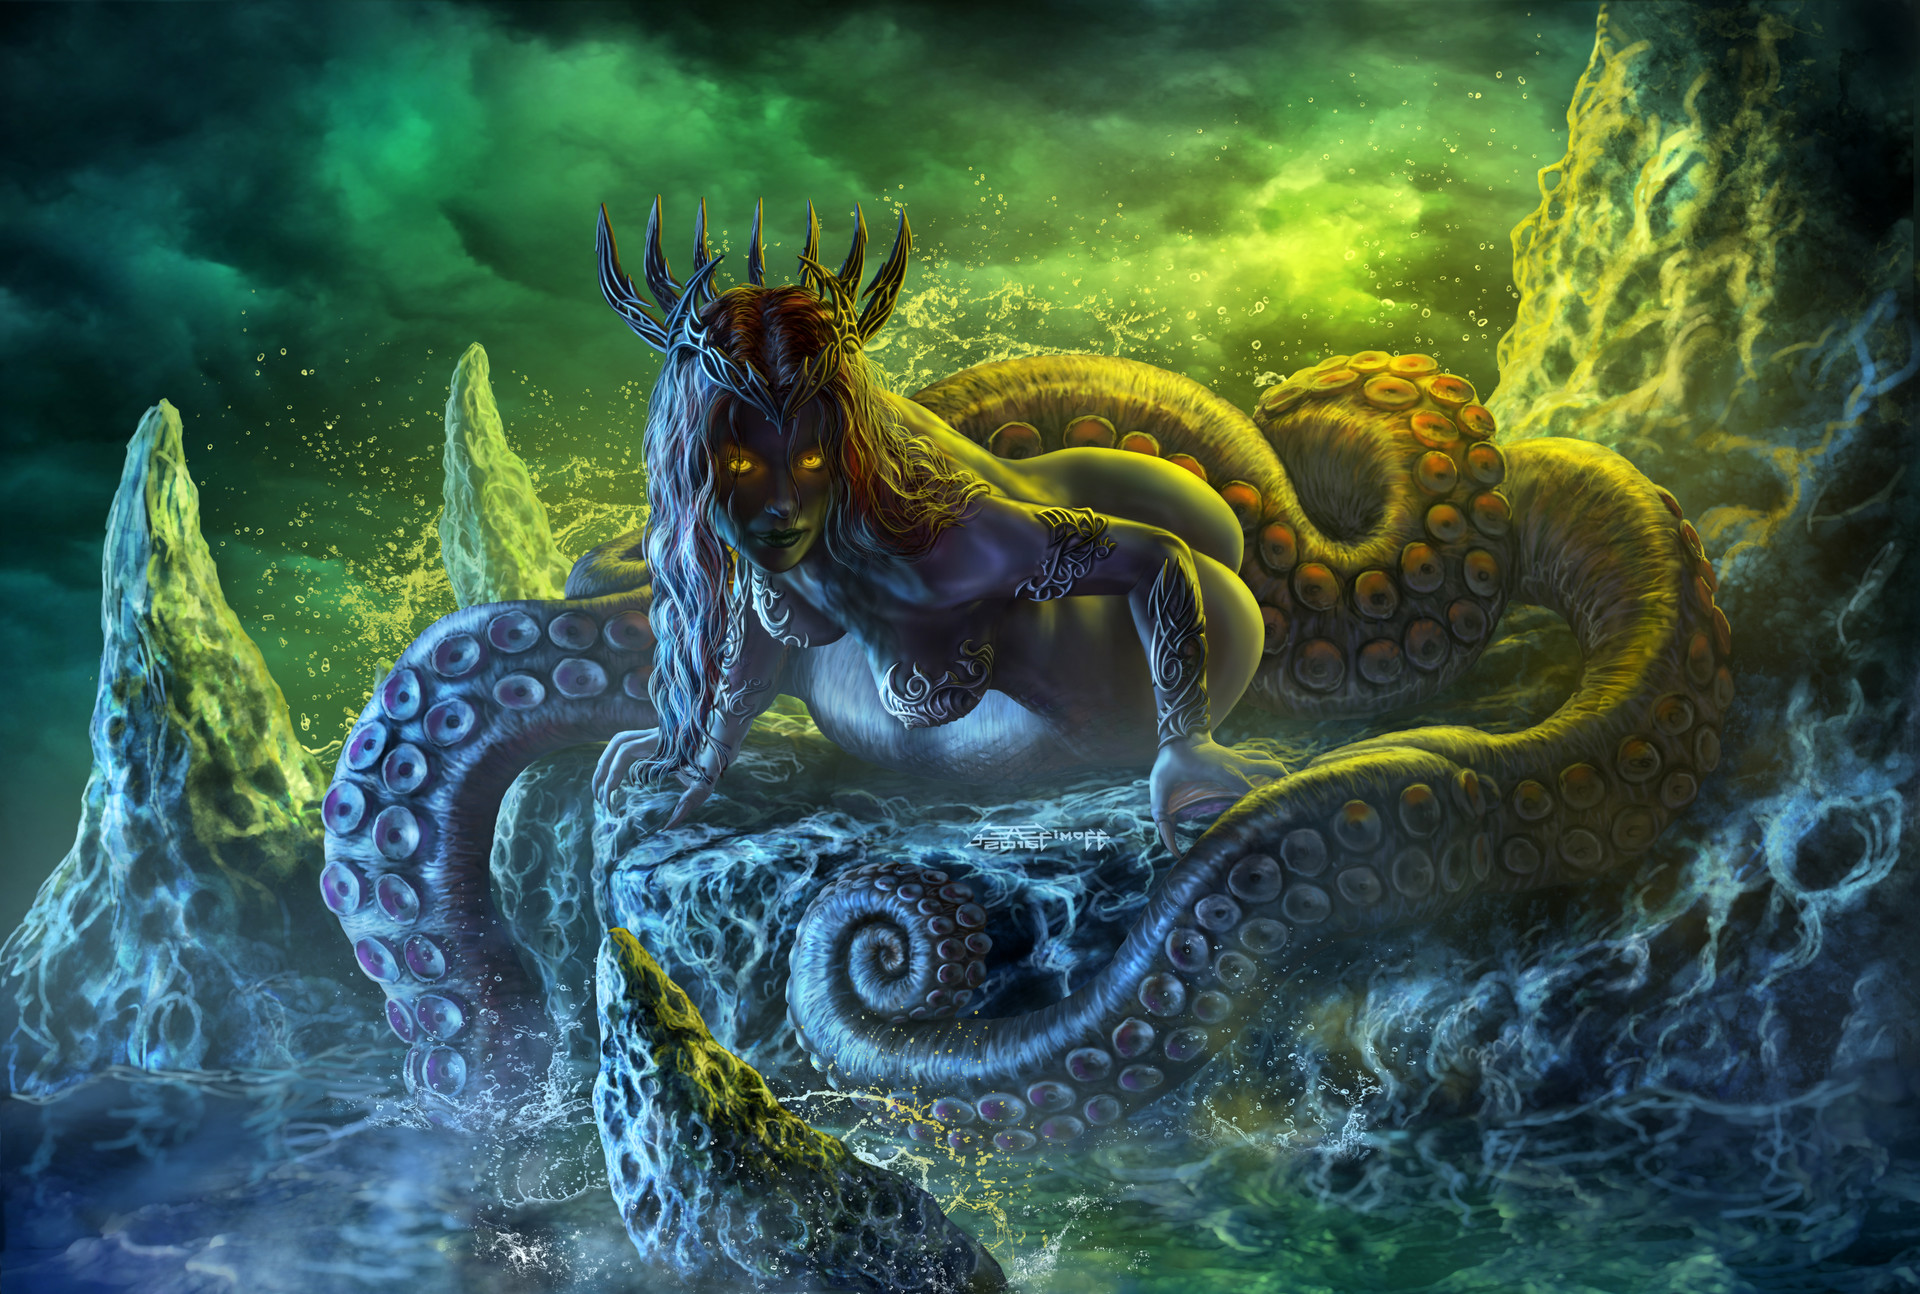 OC][Art] The Siren. My newest fantasy/horror creature illustration